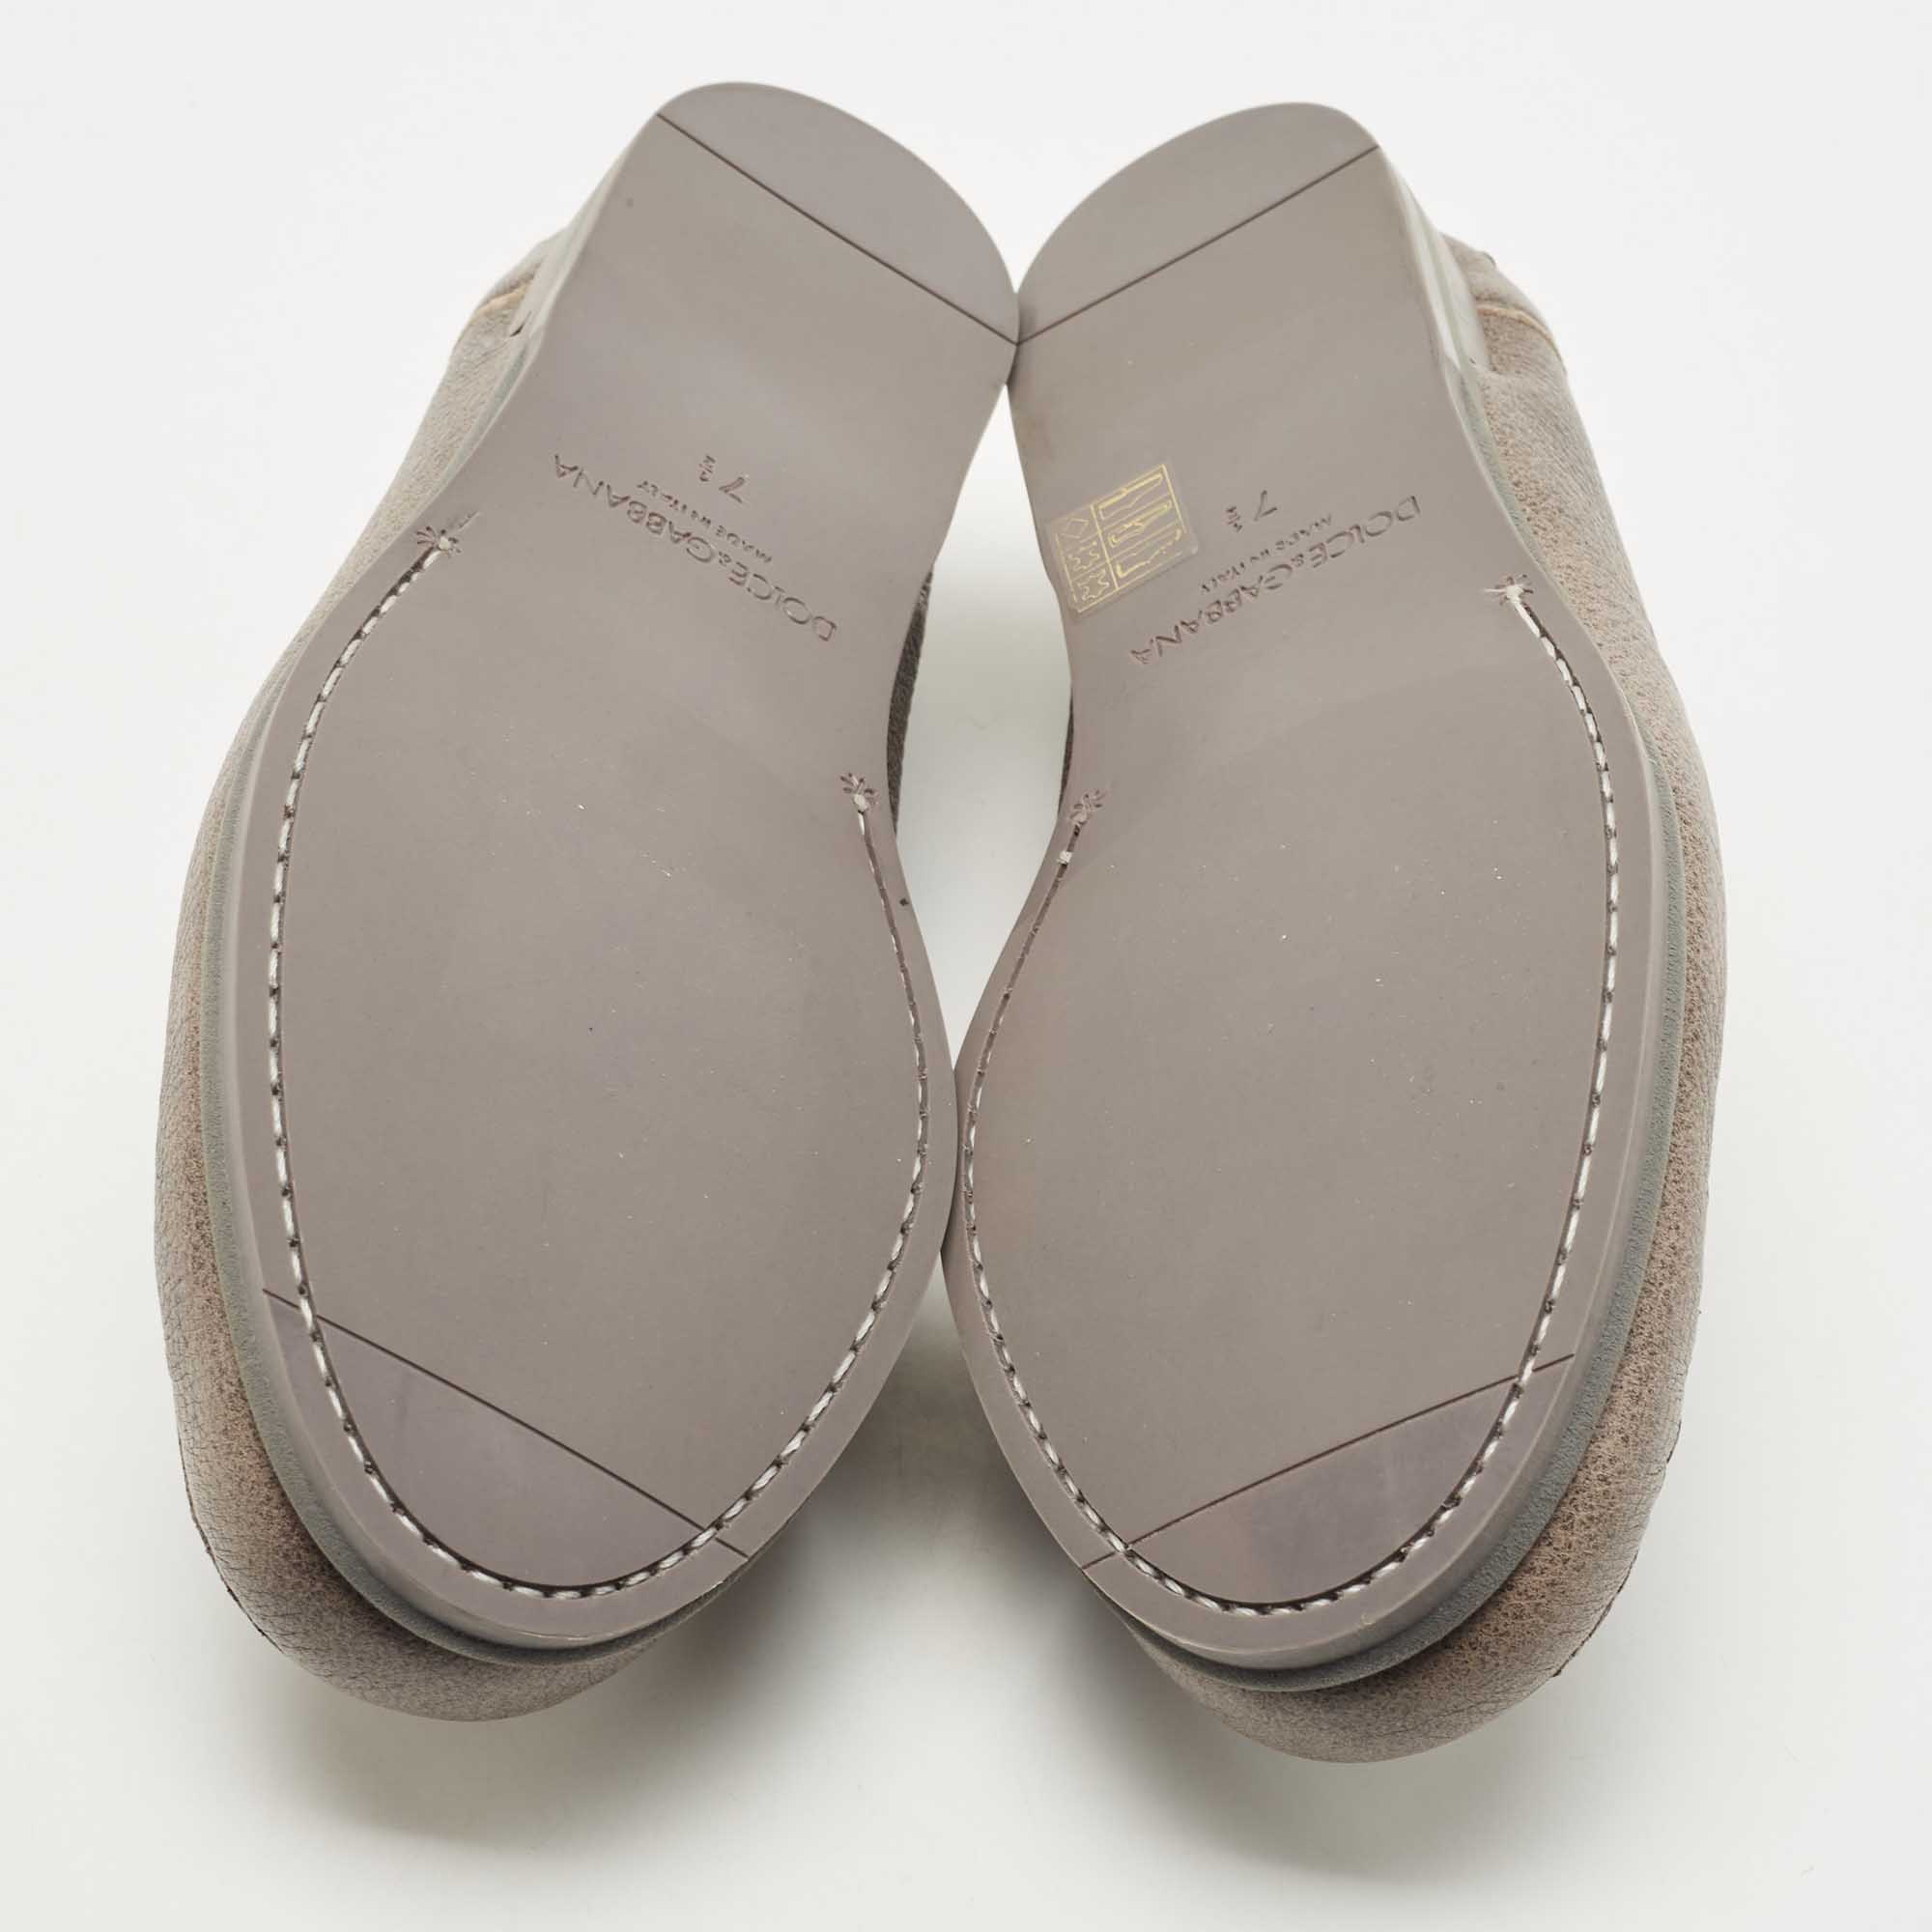 Dolce & Gabbana Grey Leather Penny Slip On Loafers Size 41.5